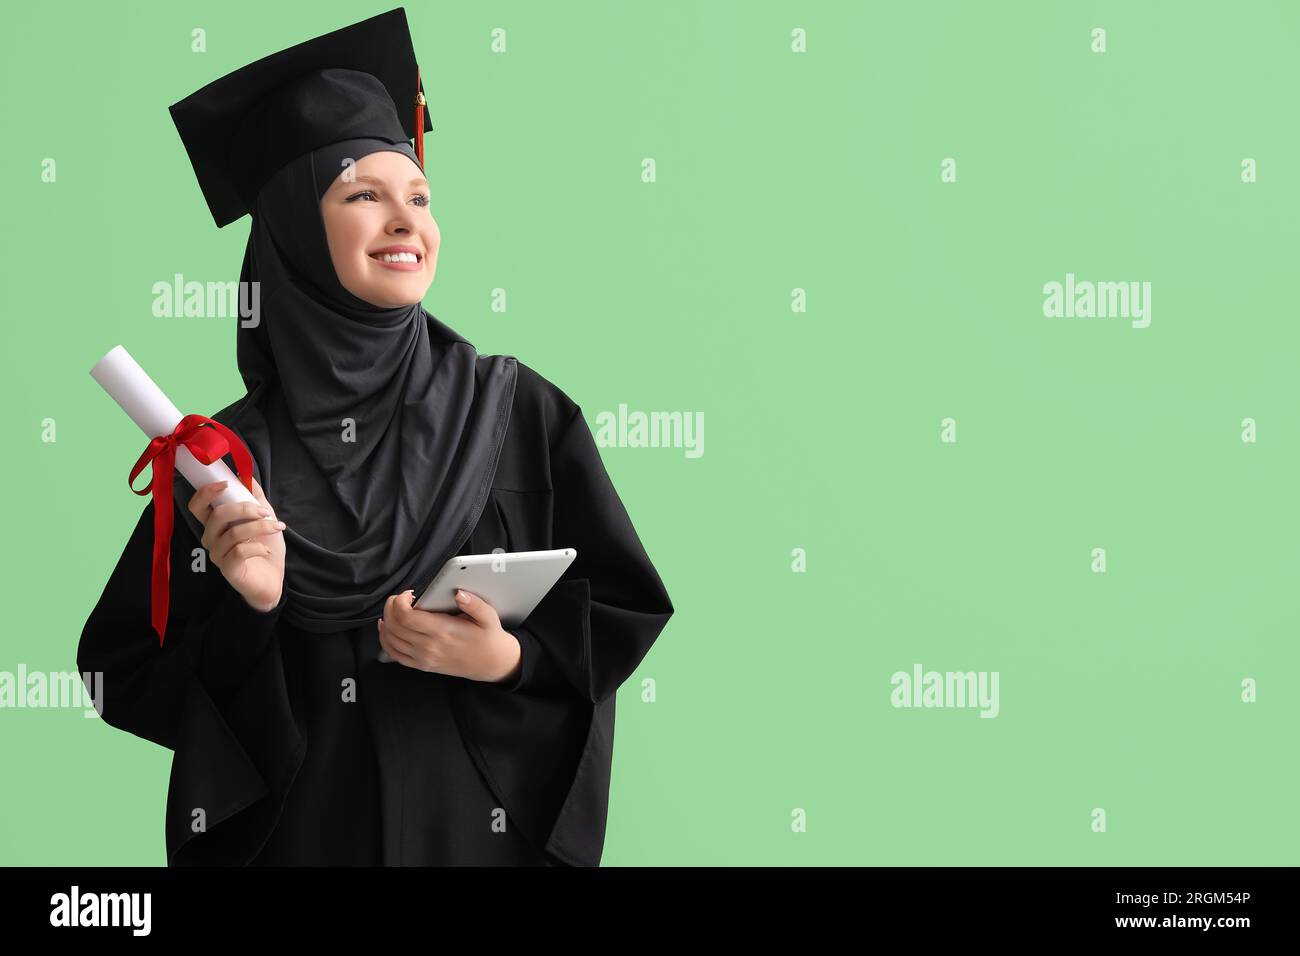 Studente laureato musulmano con diploma e tablet computer su sfondo verde Foto Stock